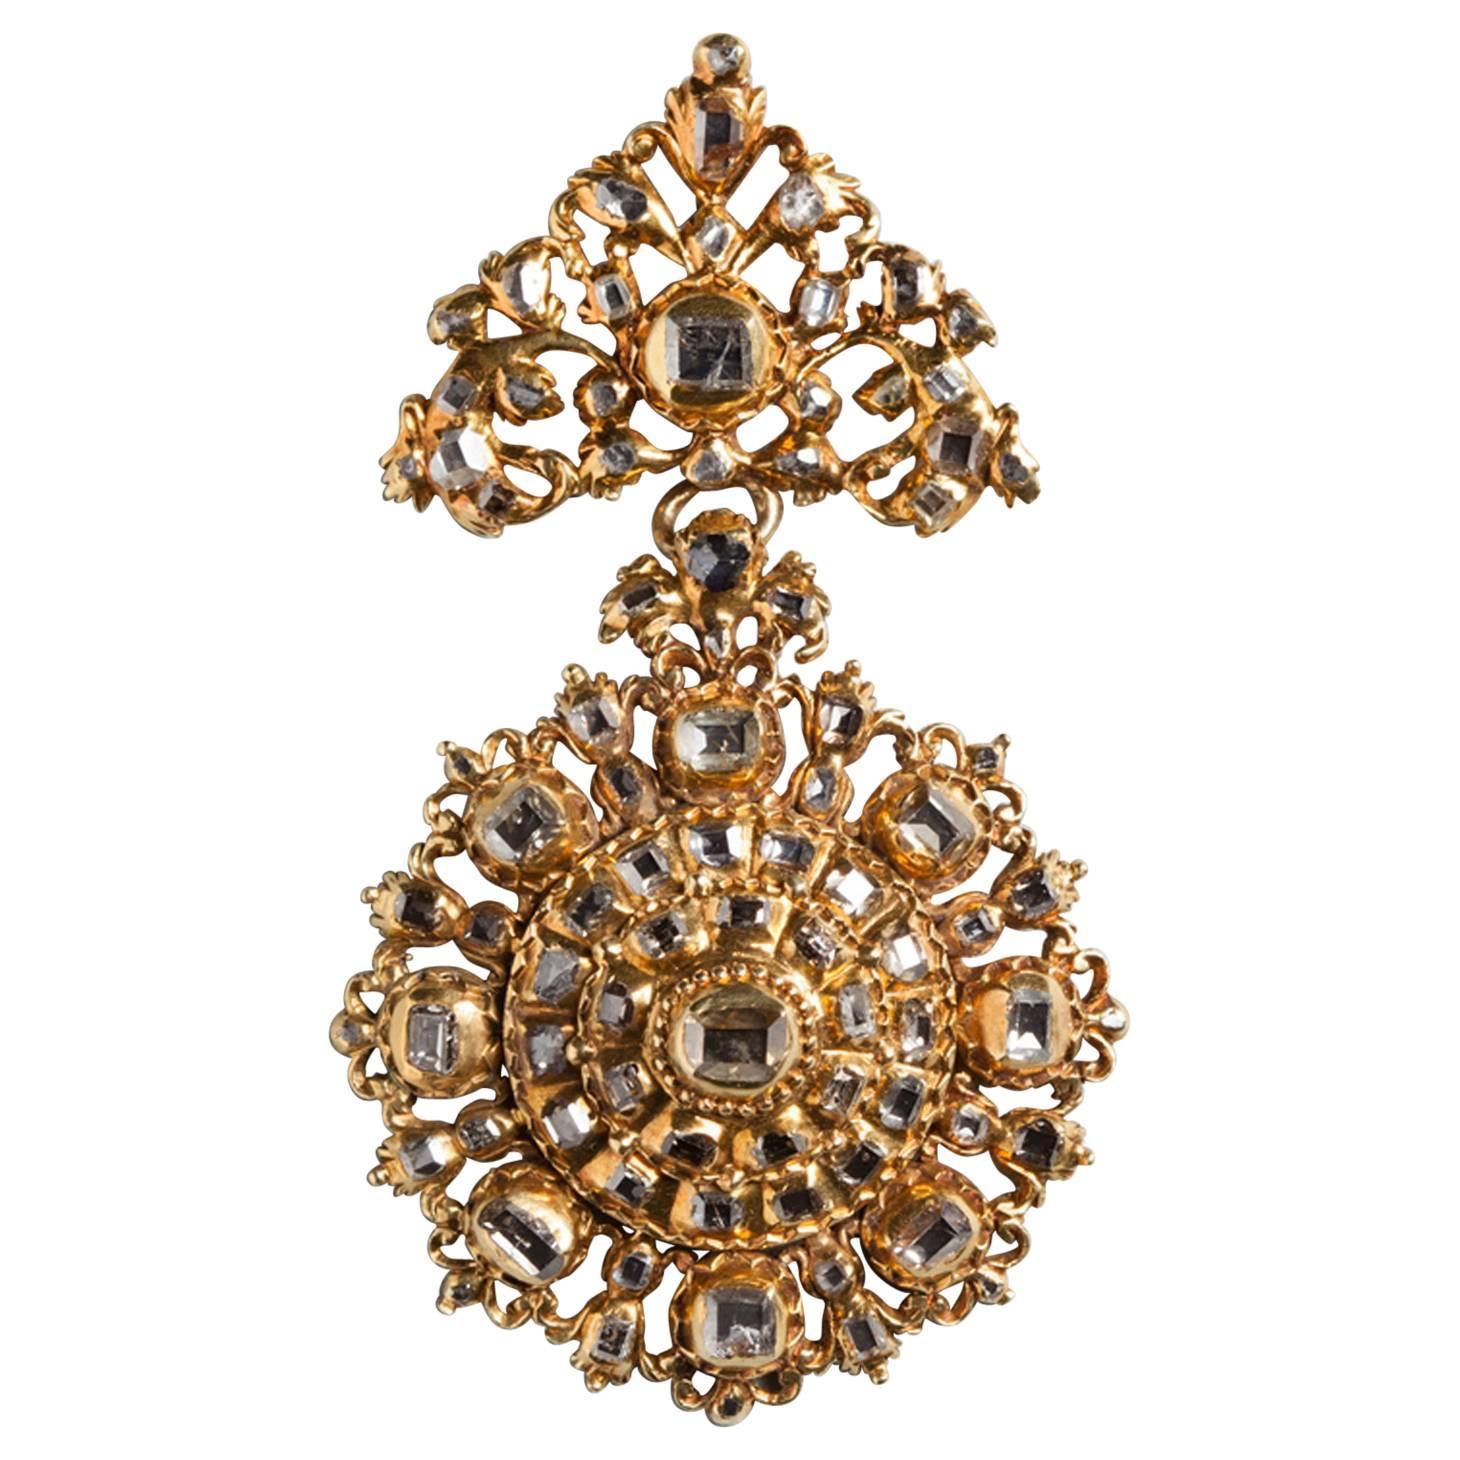 Antique 17th-Century Spanish Diamond Gold Pendant For Sale at 1stdibs